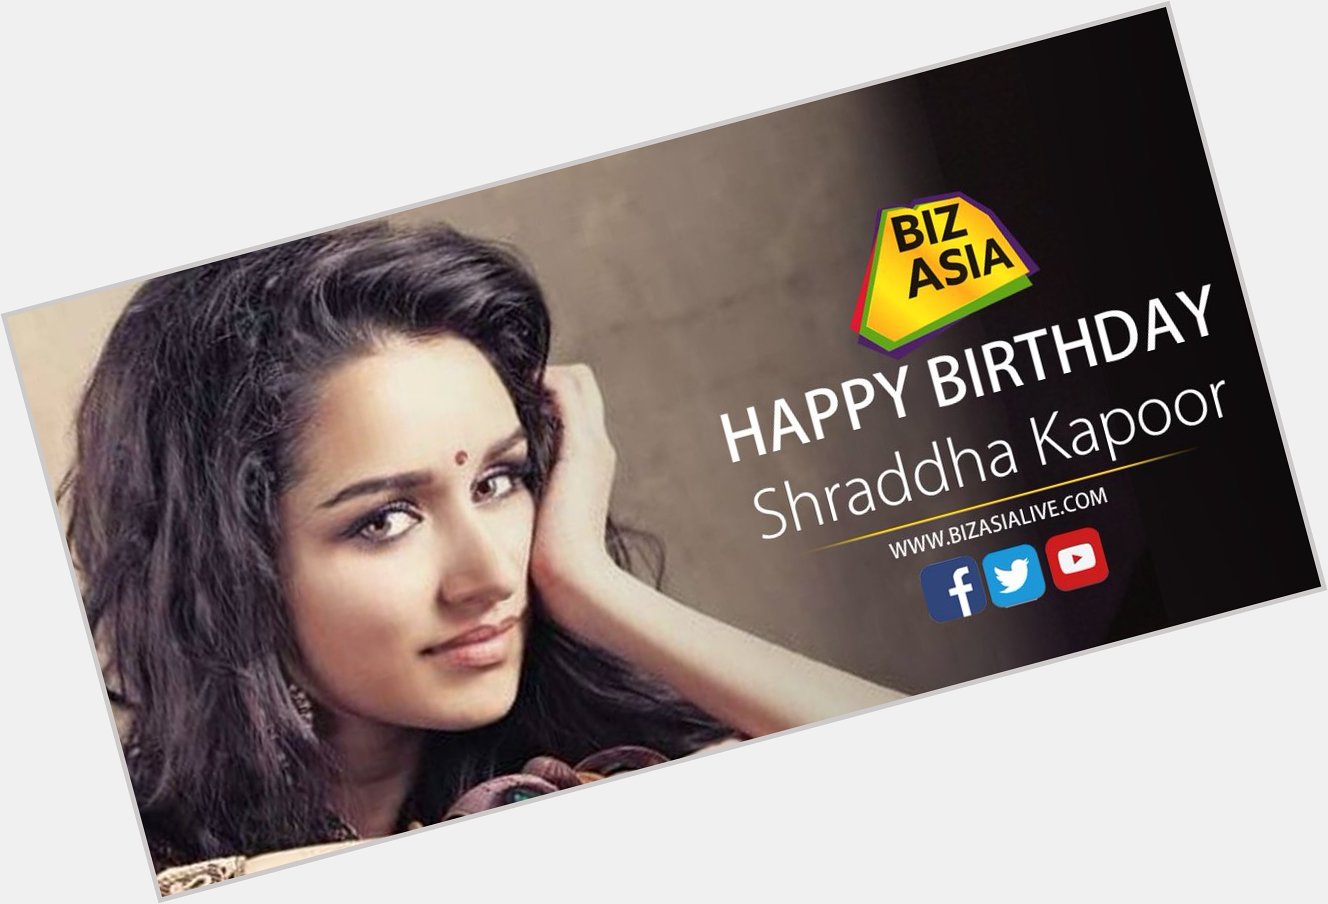  wishes Shraddha Kapoor a very happy birthday.  